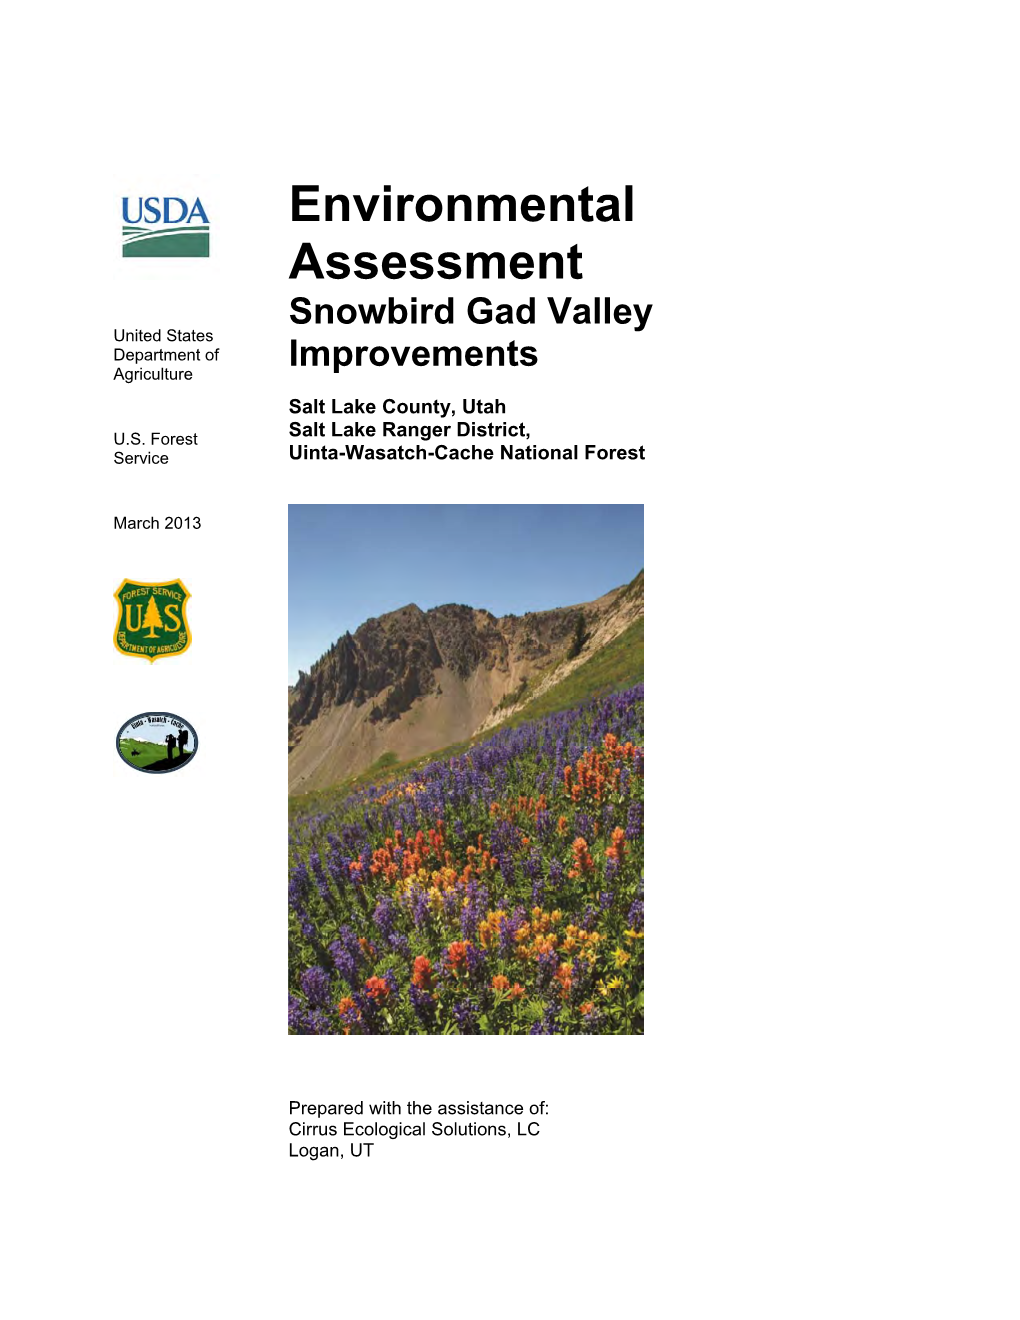 Environmental Assessment Snowbird Gad Valley Improvements